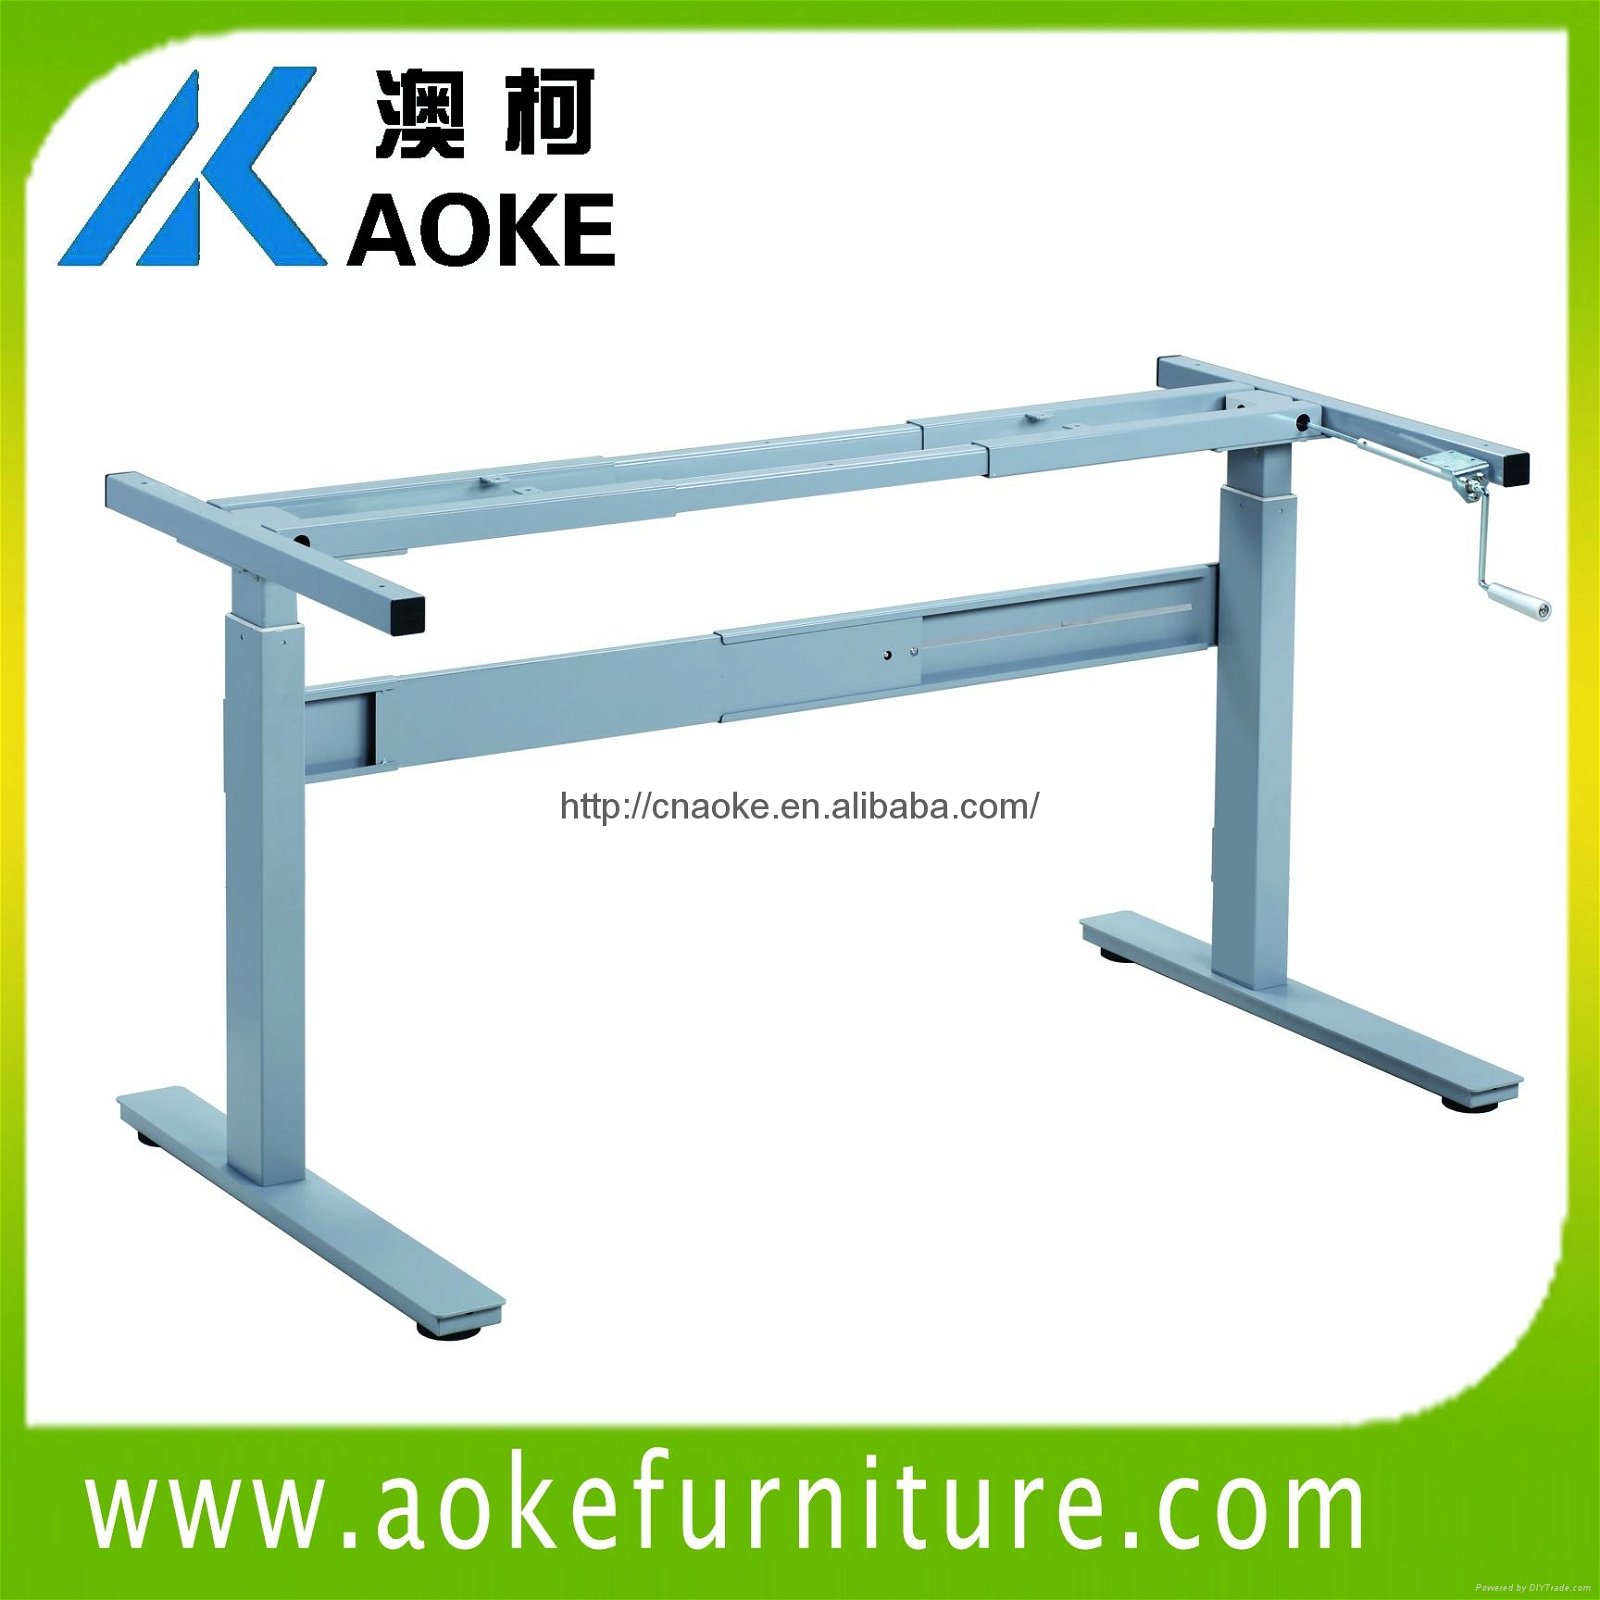 AOKE AK02HT-B manual cranked adjustable tables 2